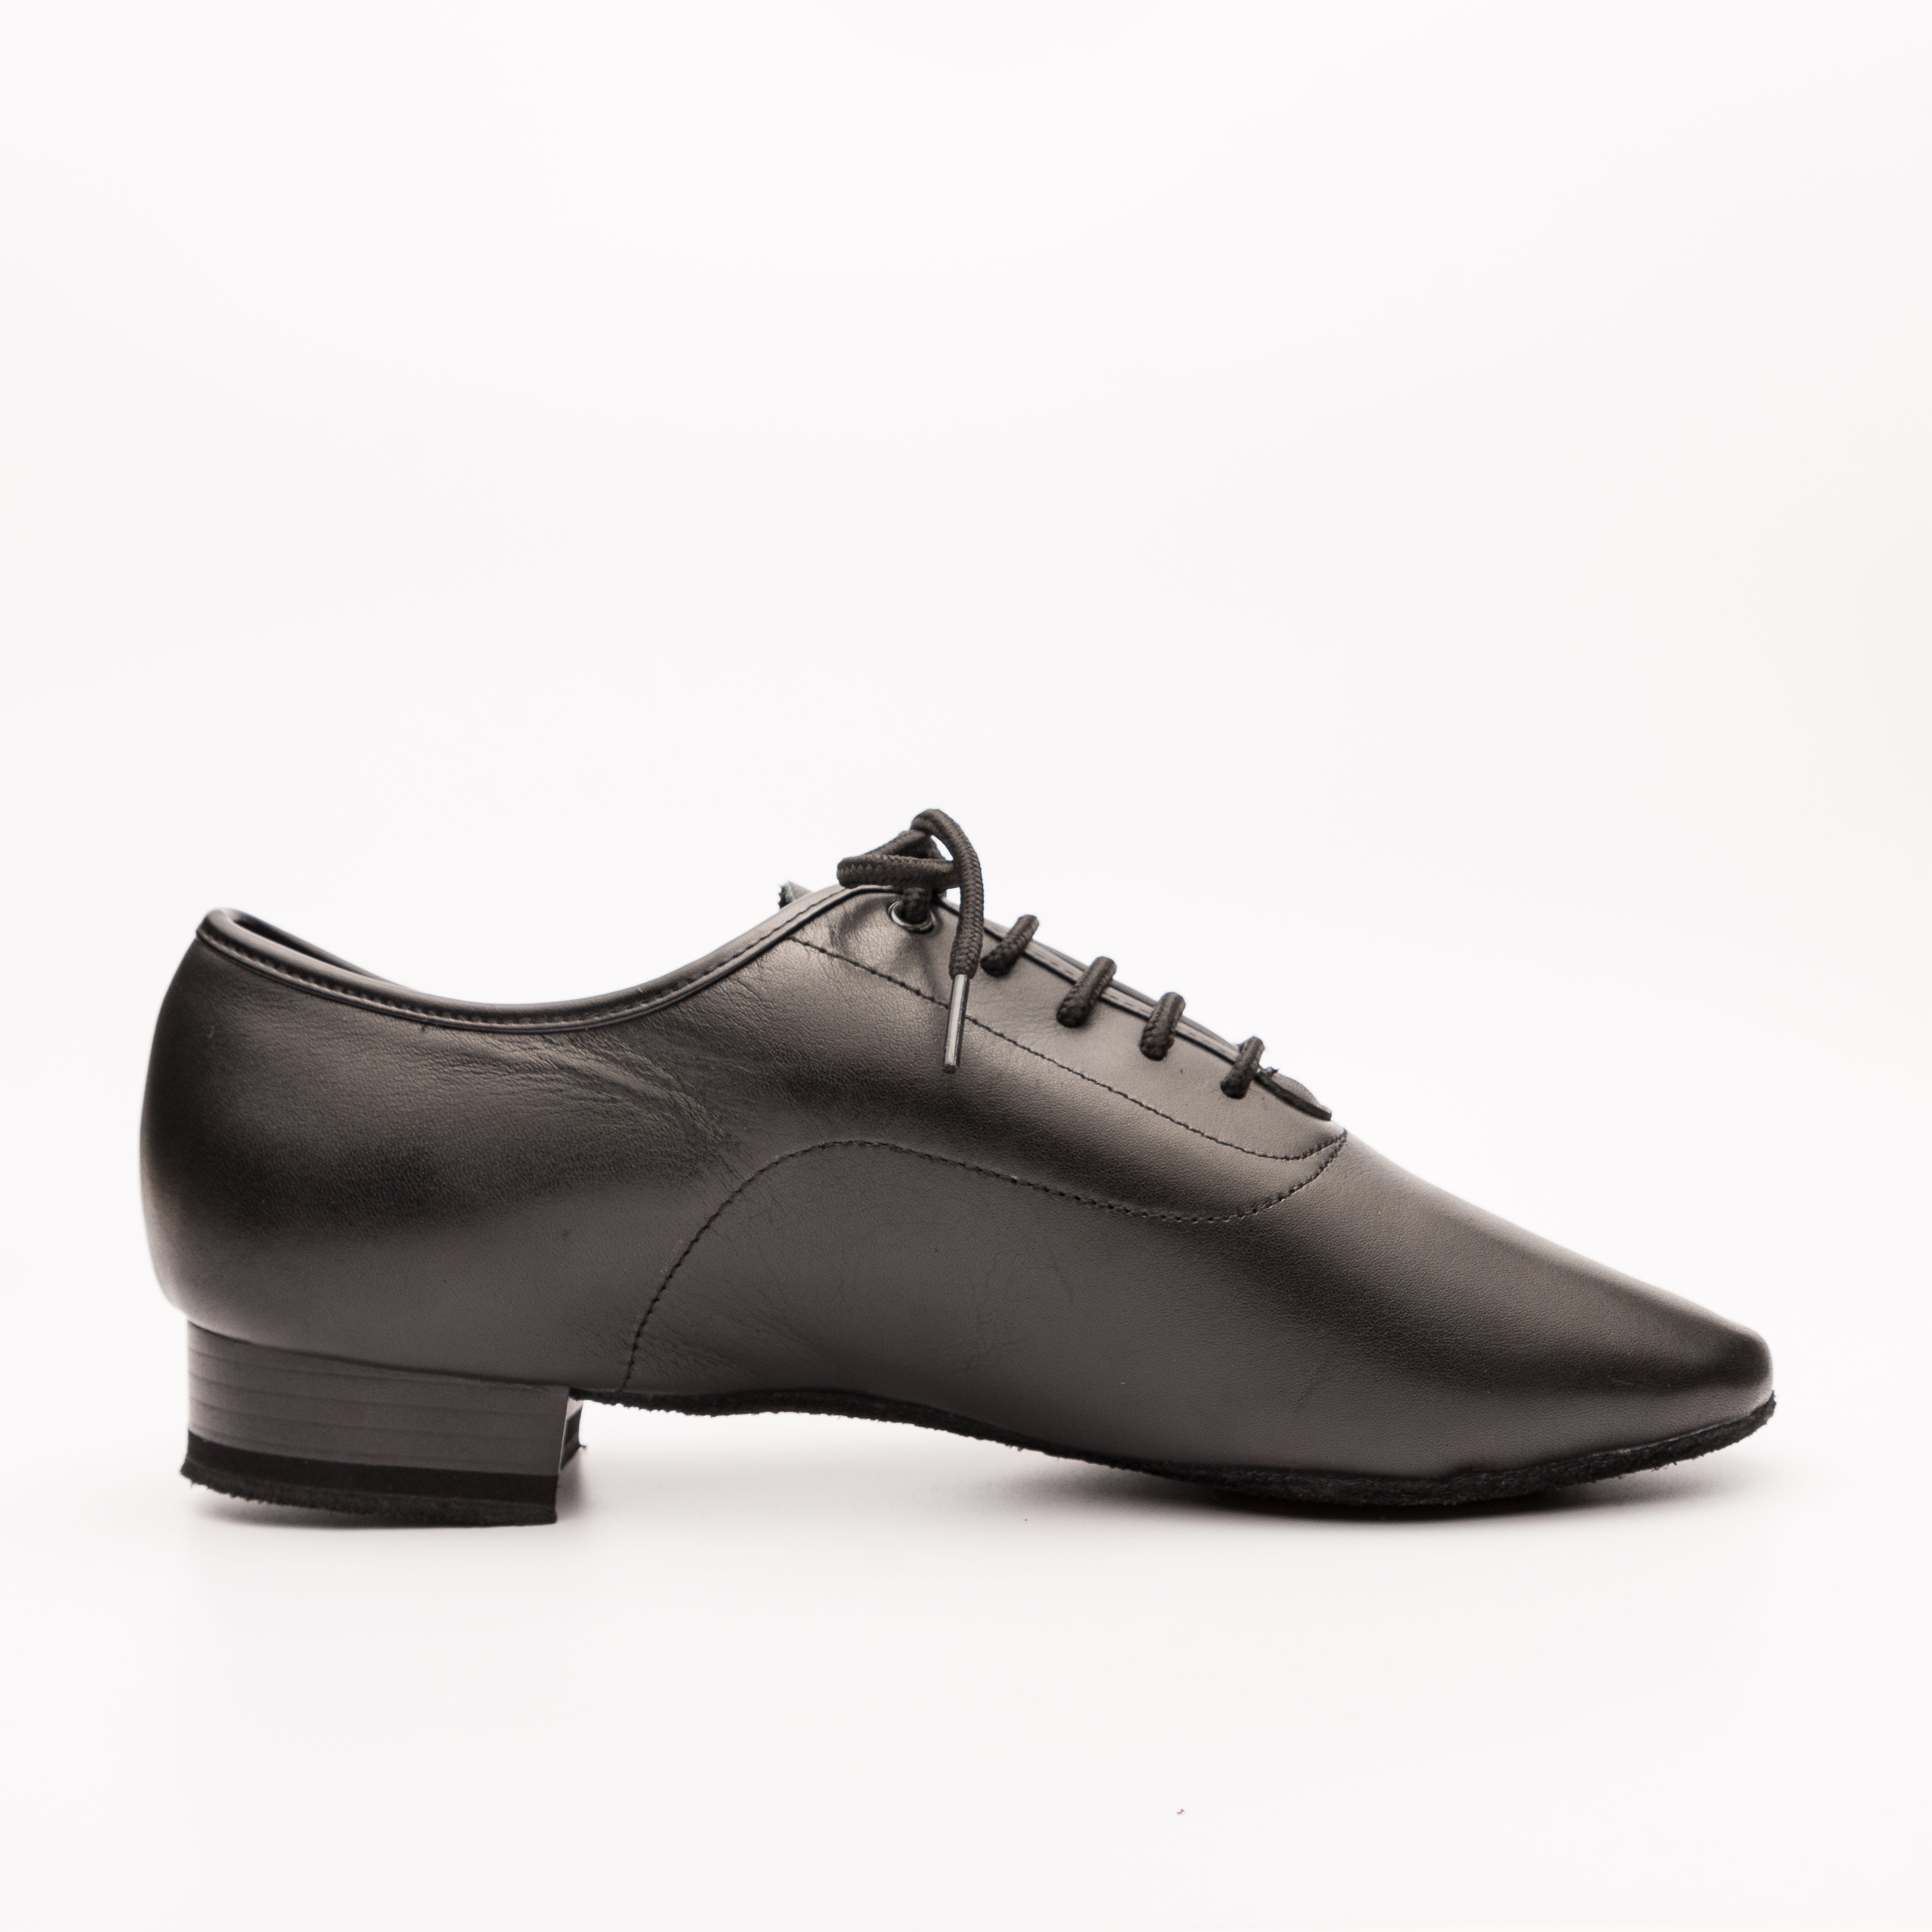 PRO Edition Leather Men's Shoes - Low Heel